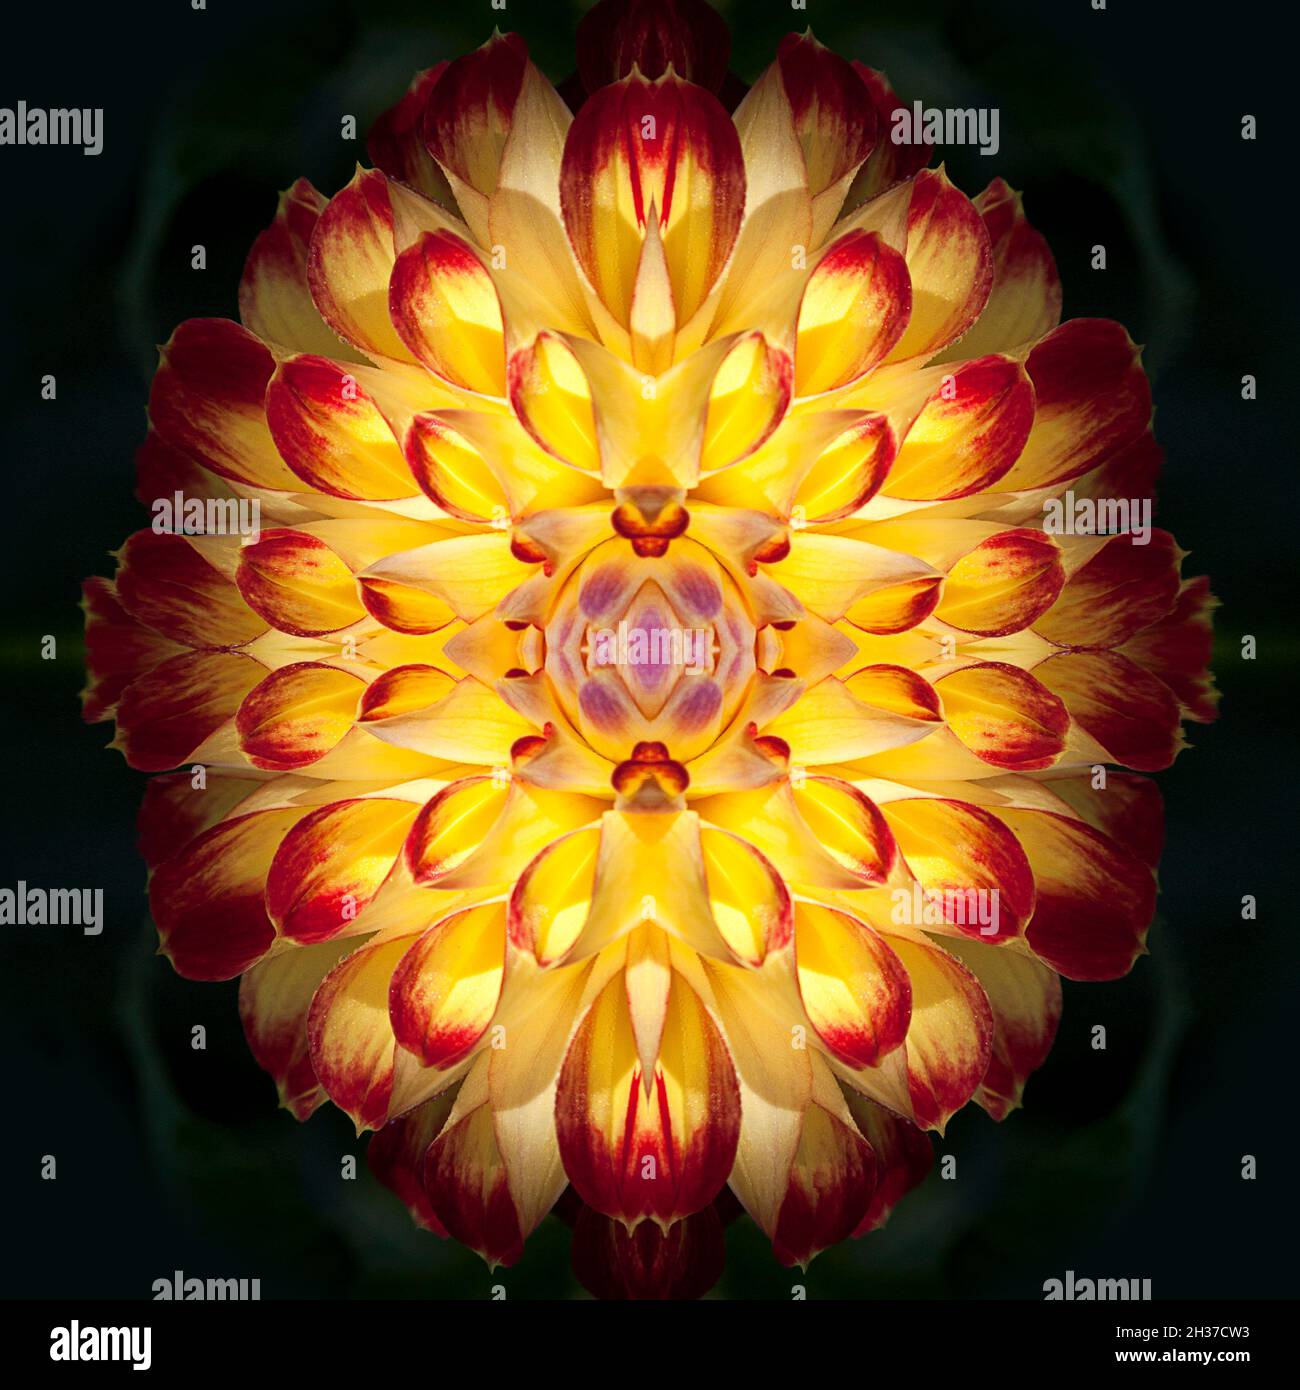 Kaleidoscope of a Dahlia flower Stock Photo